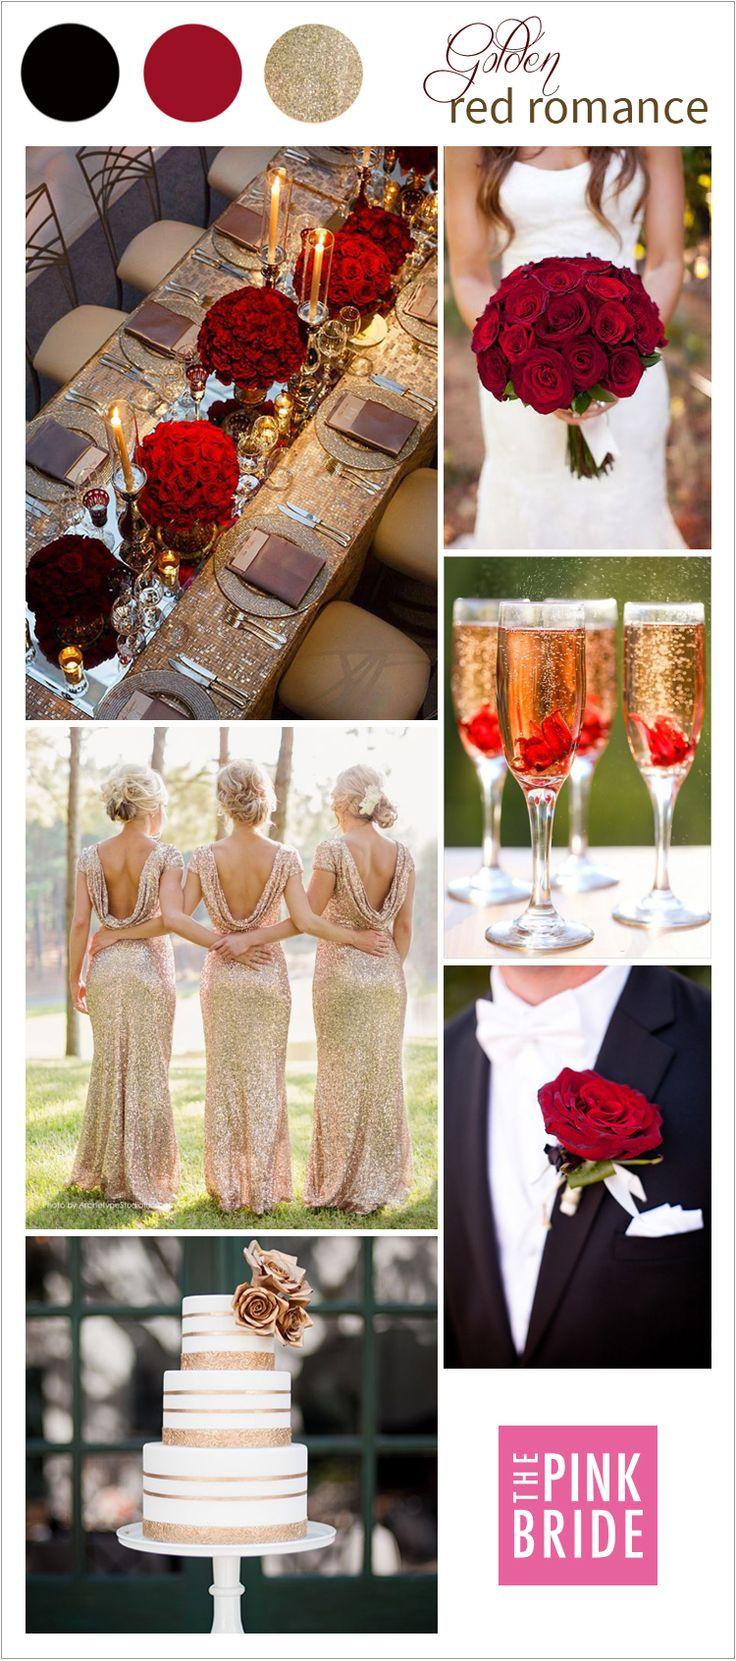 Wedding - Wedding Color Board: Golden Red Romance